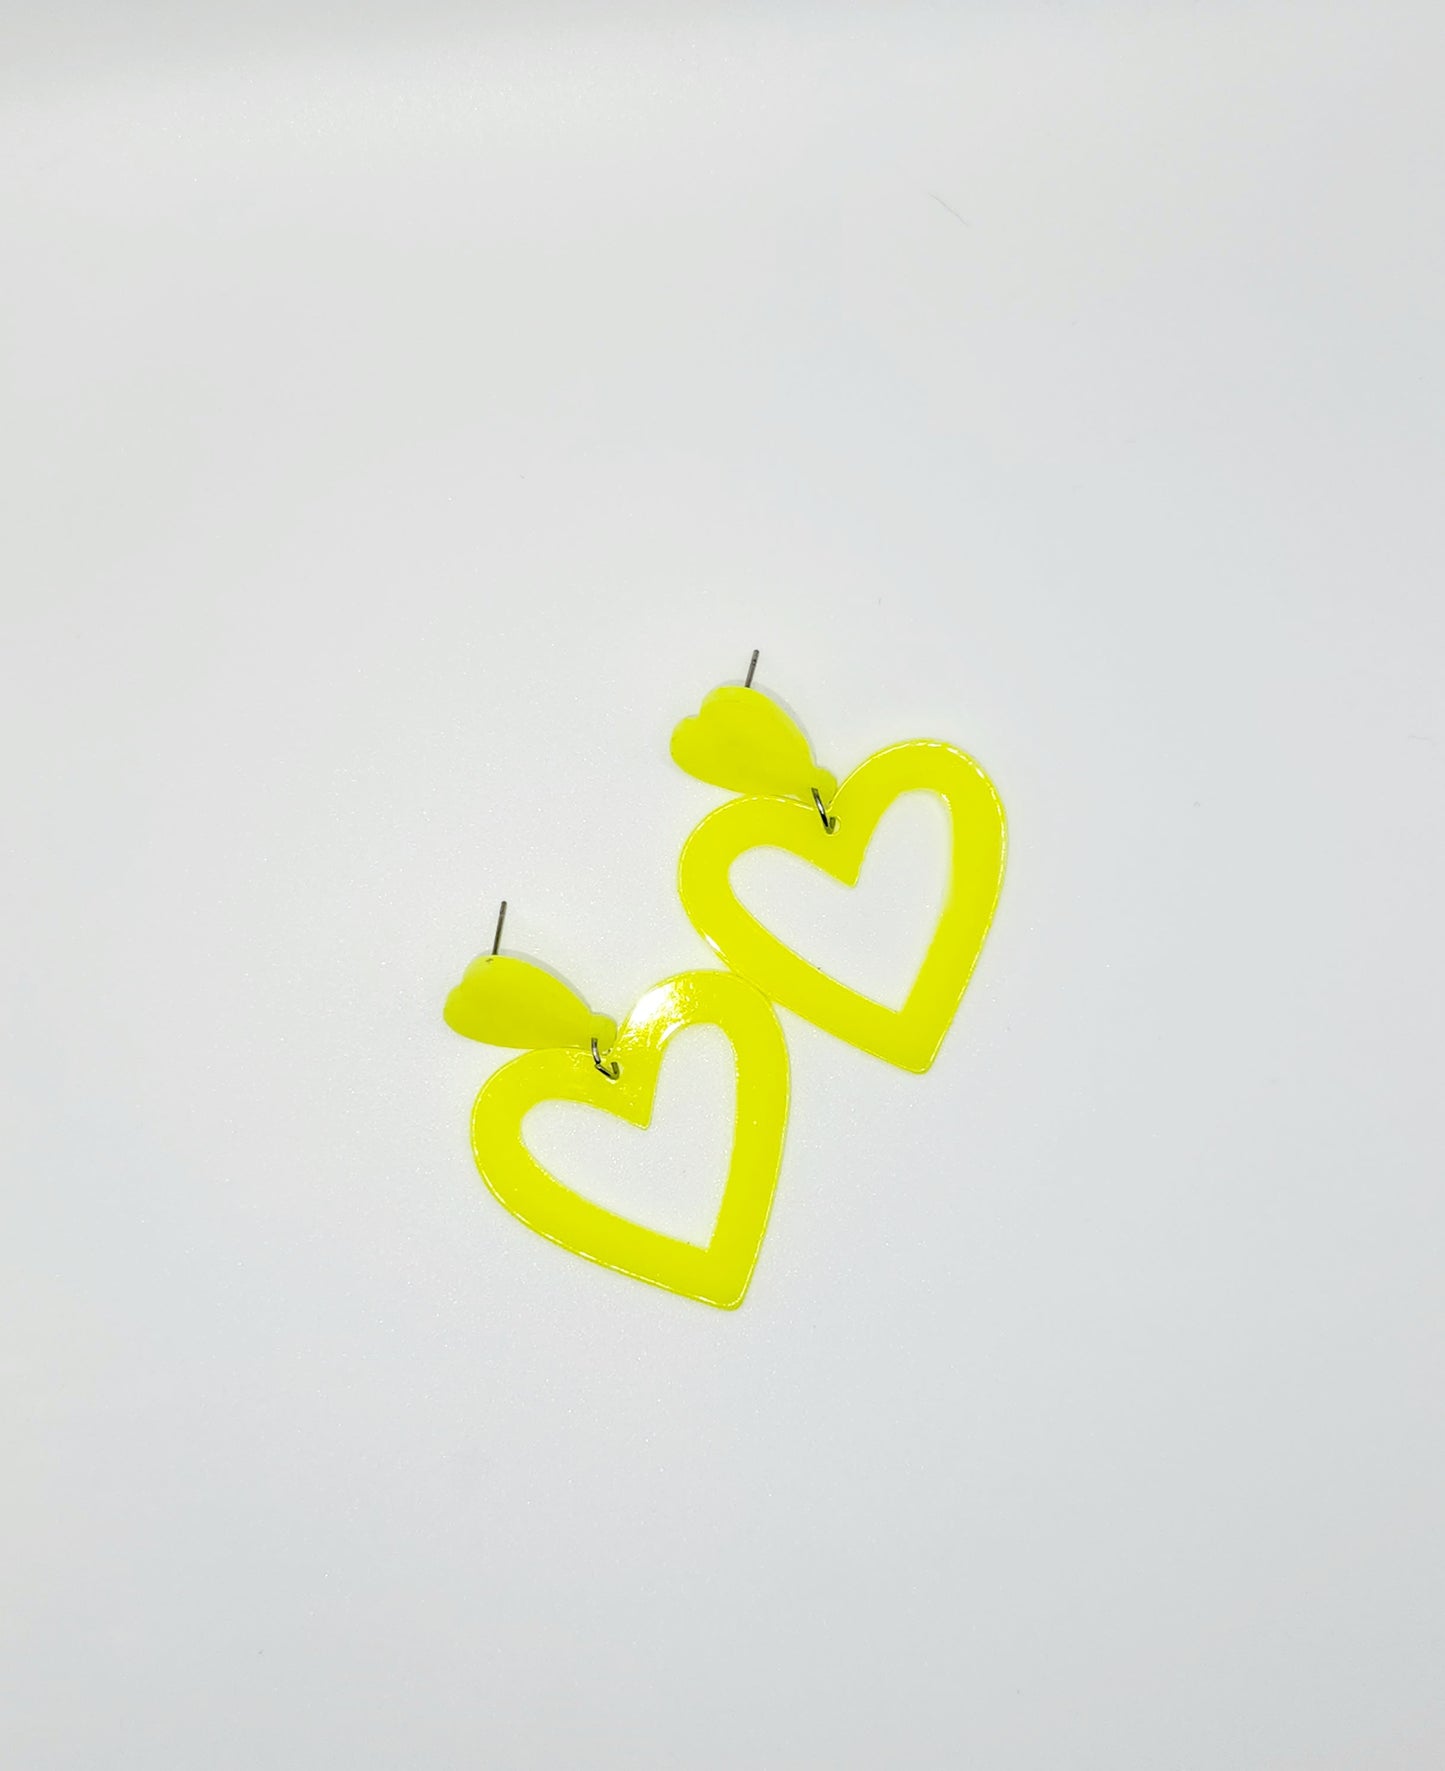 Neon Yellow Hearts